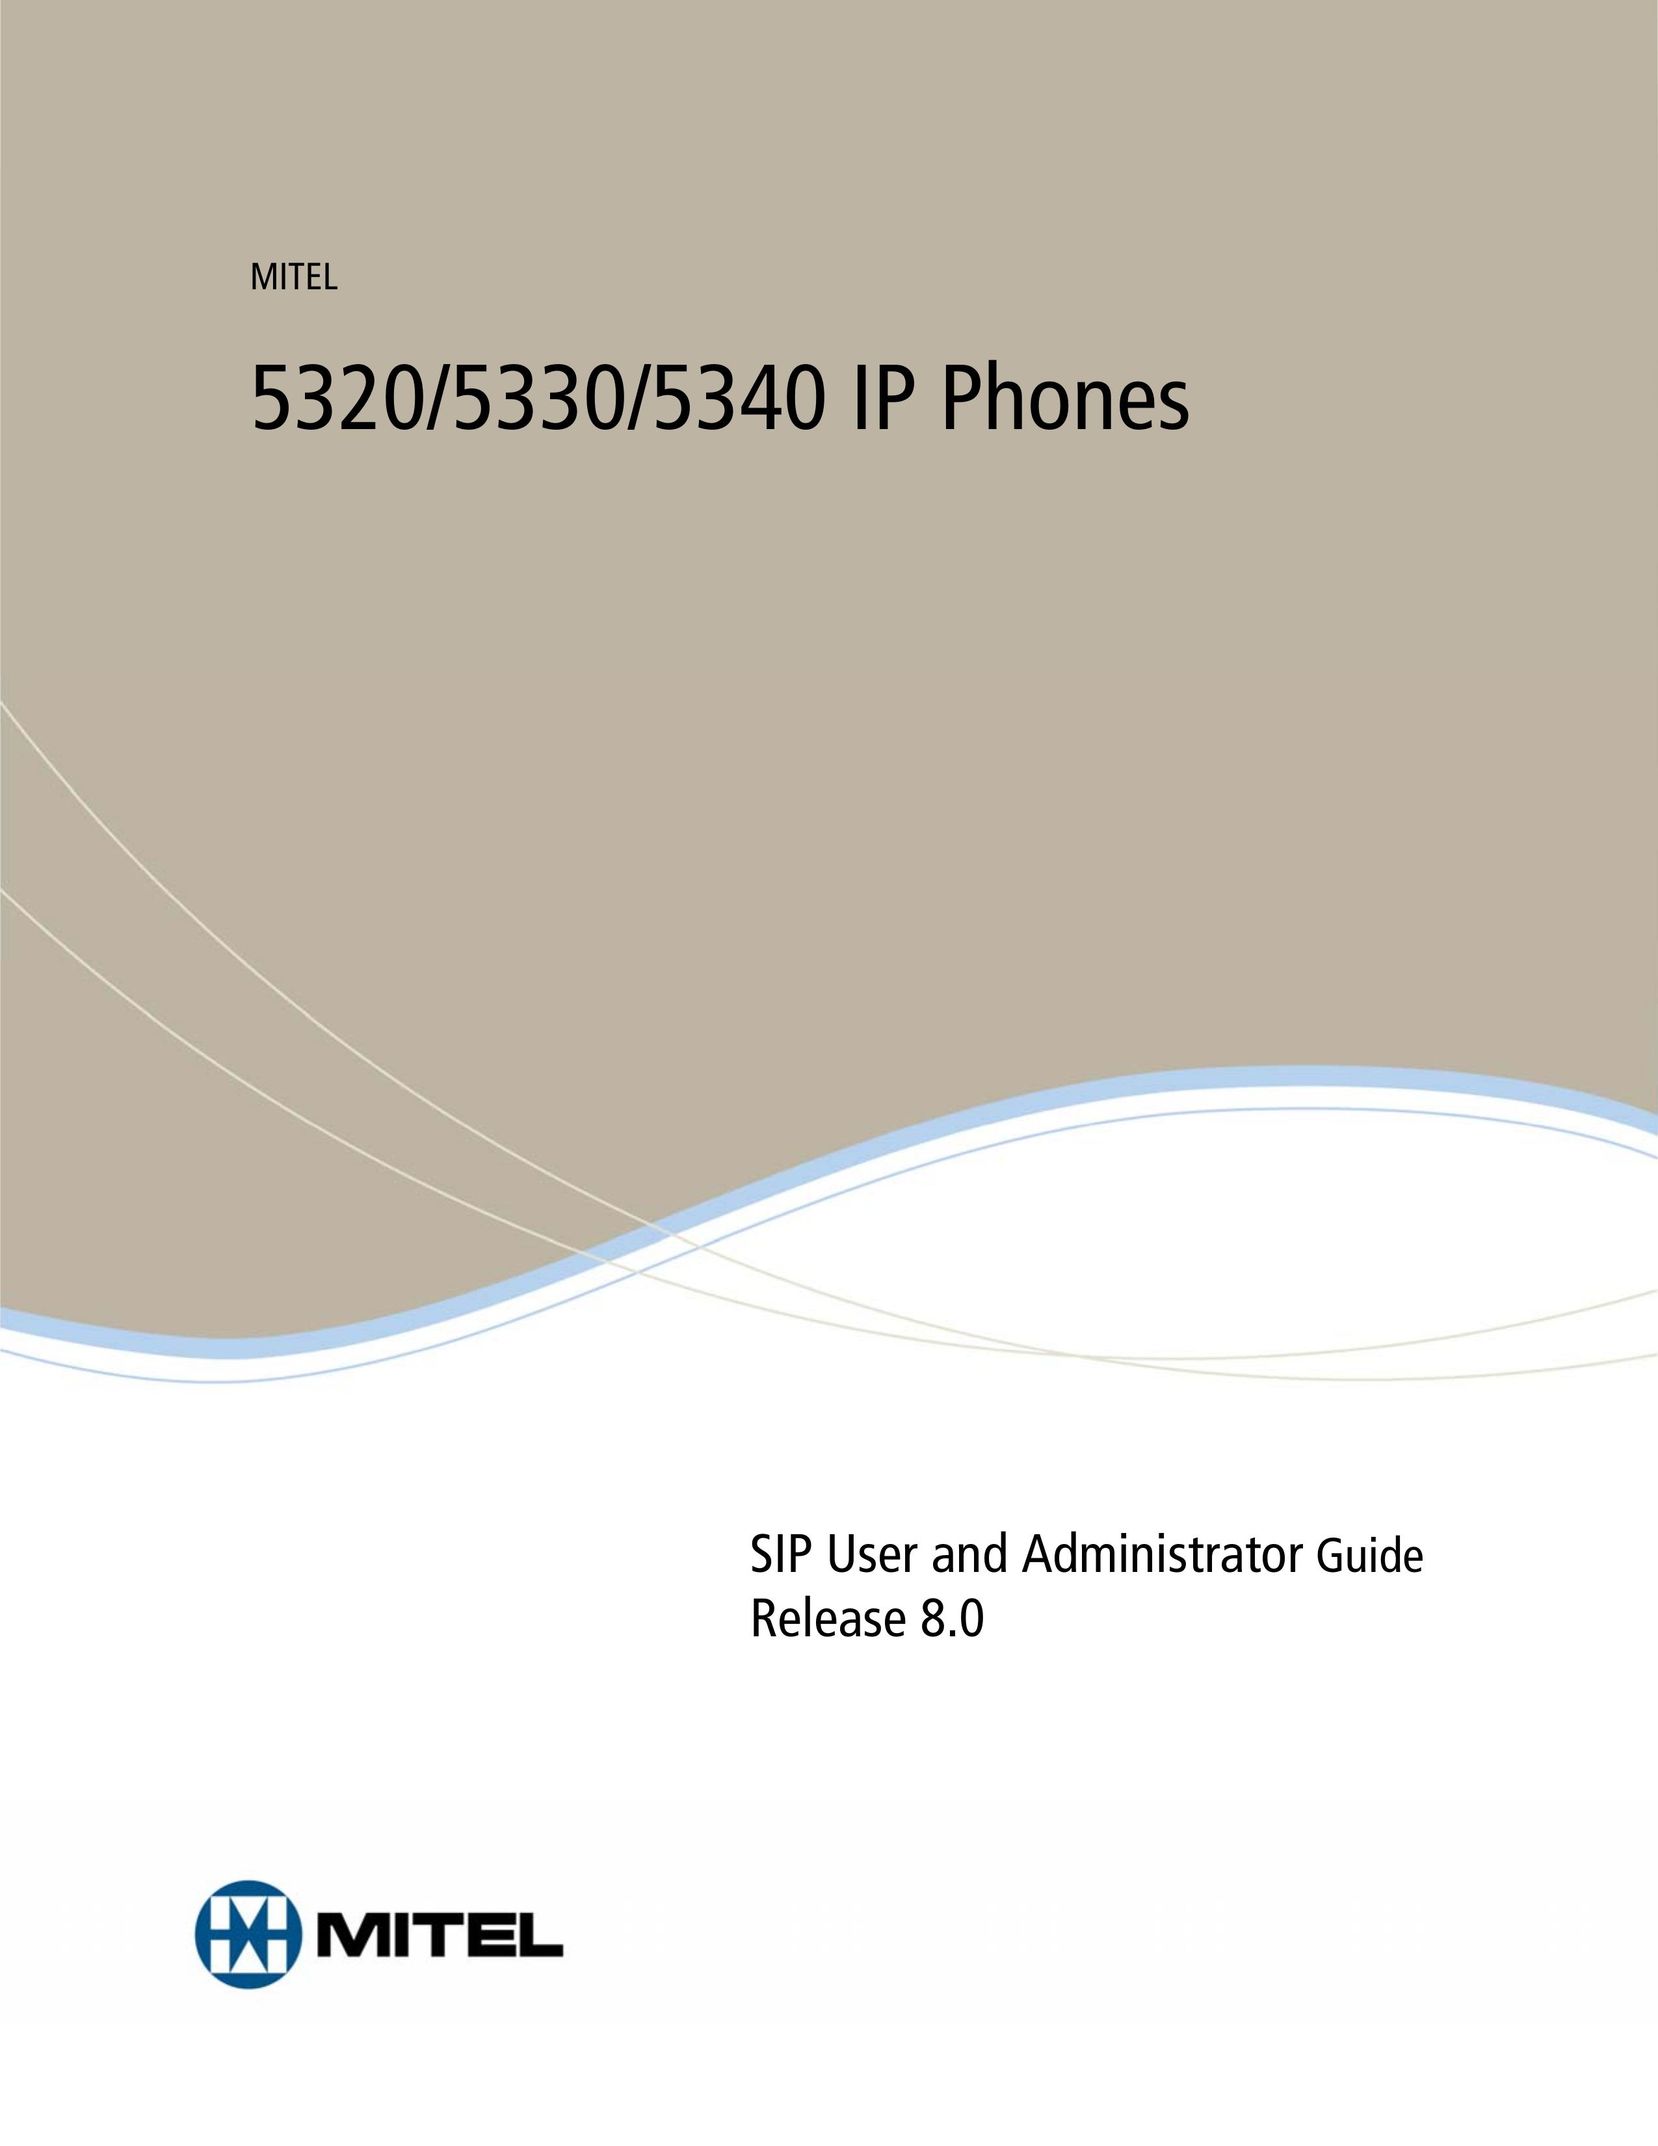 Mitel 5340 IP Phone User Manual